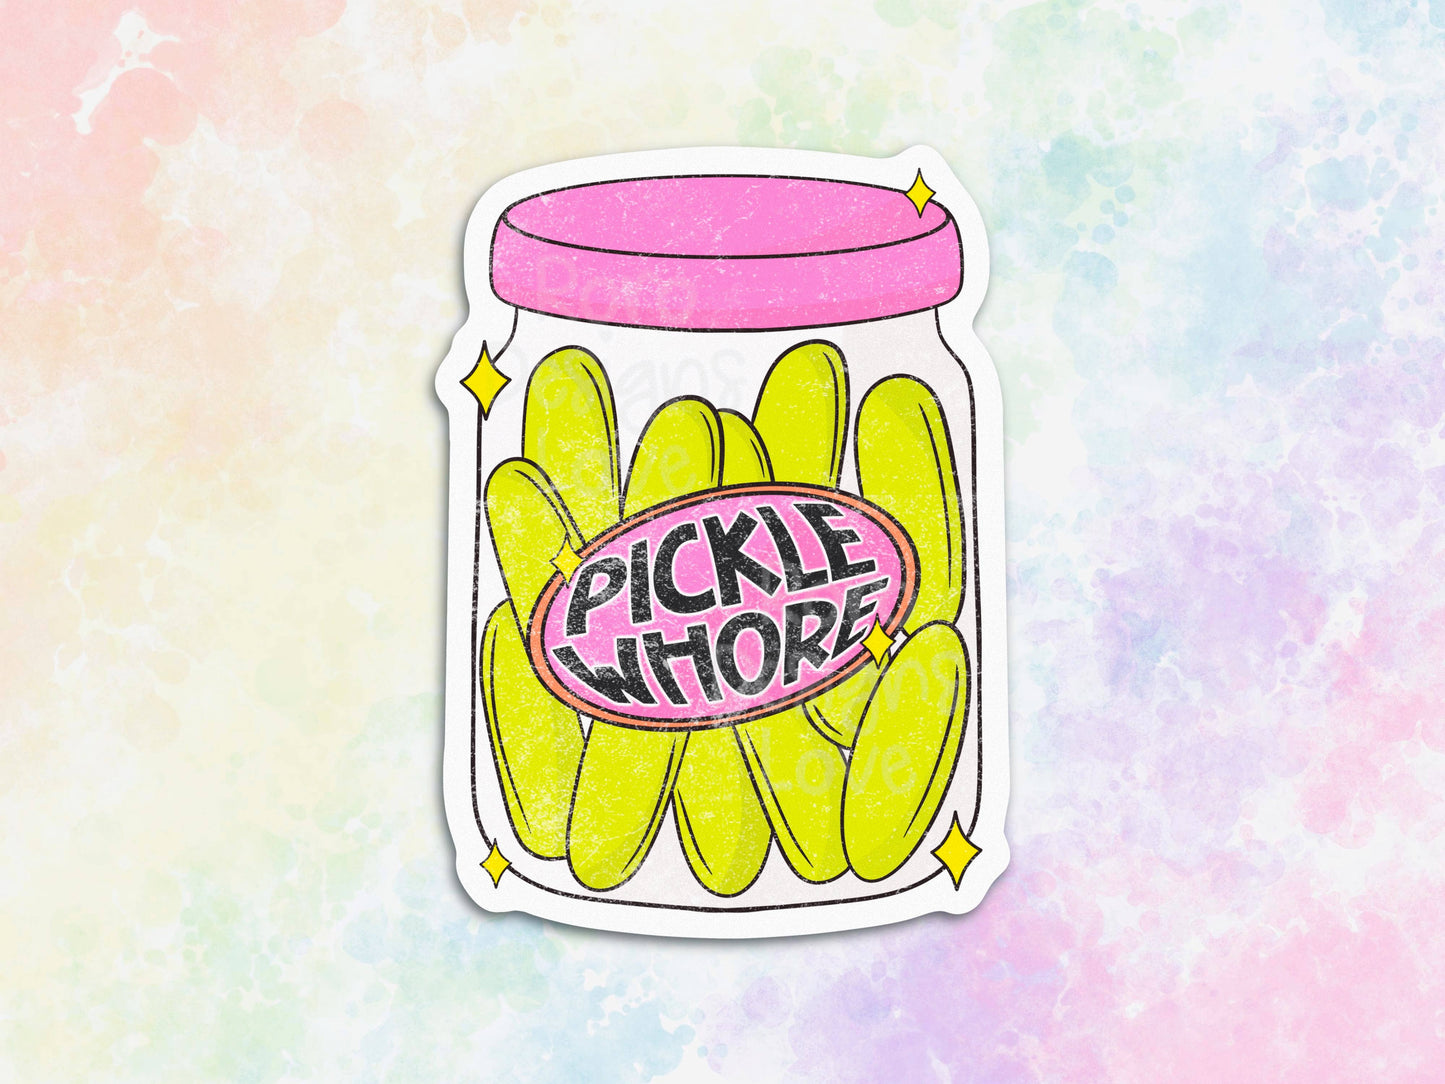 Pickle lover sticker for phones: 3" / Loose